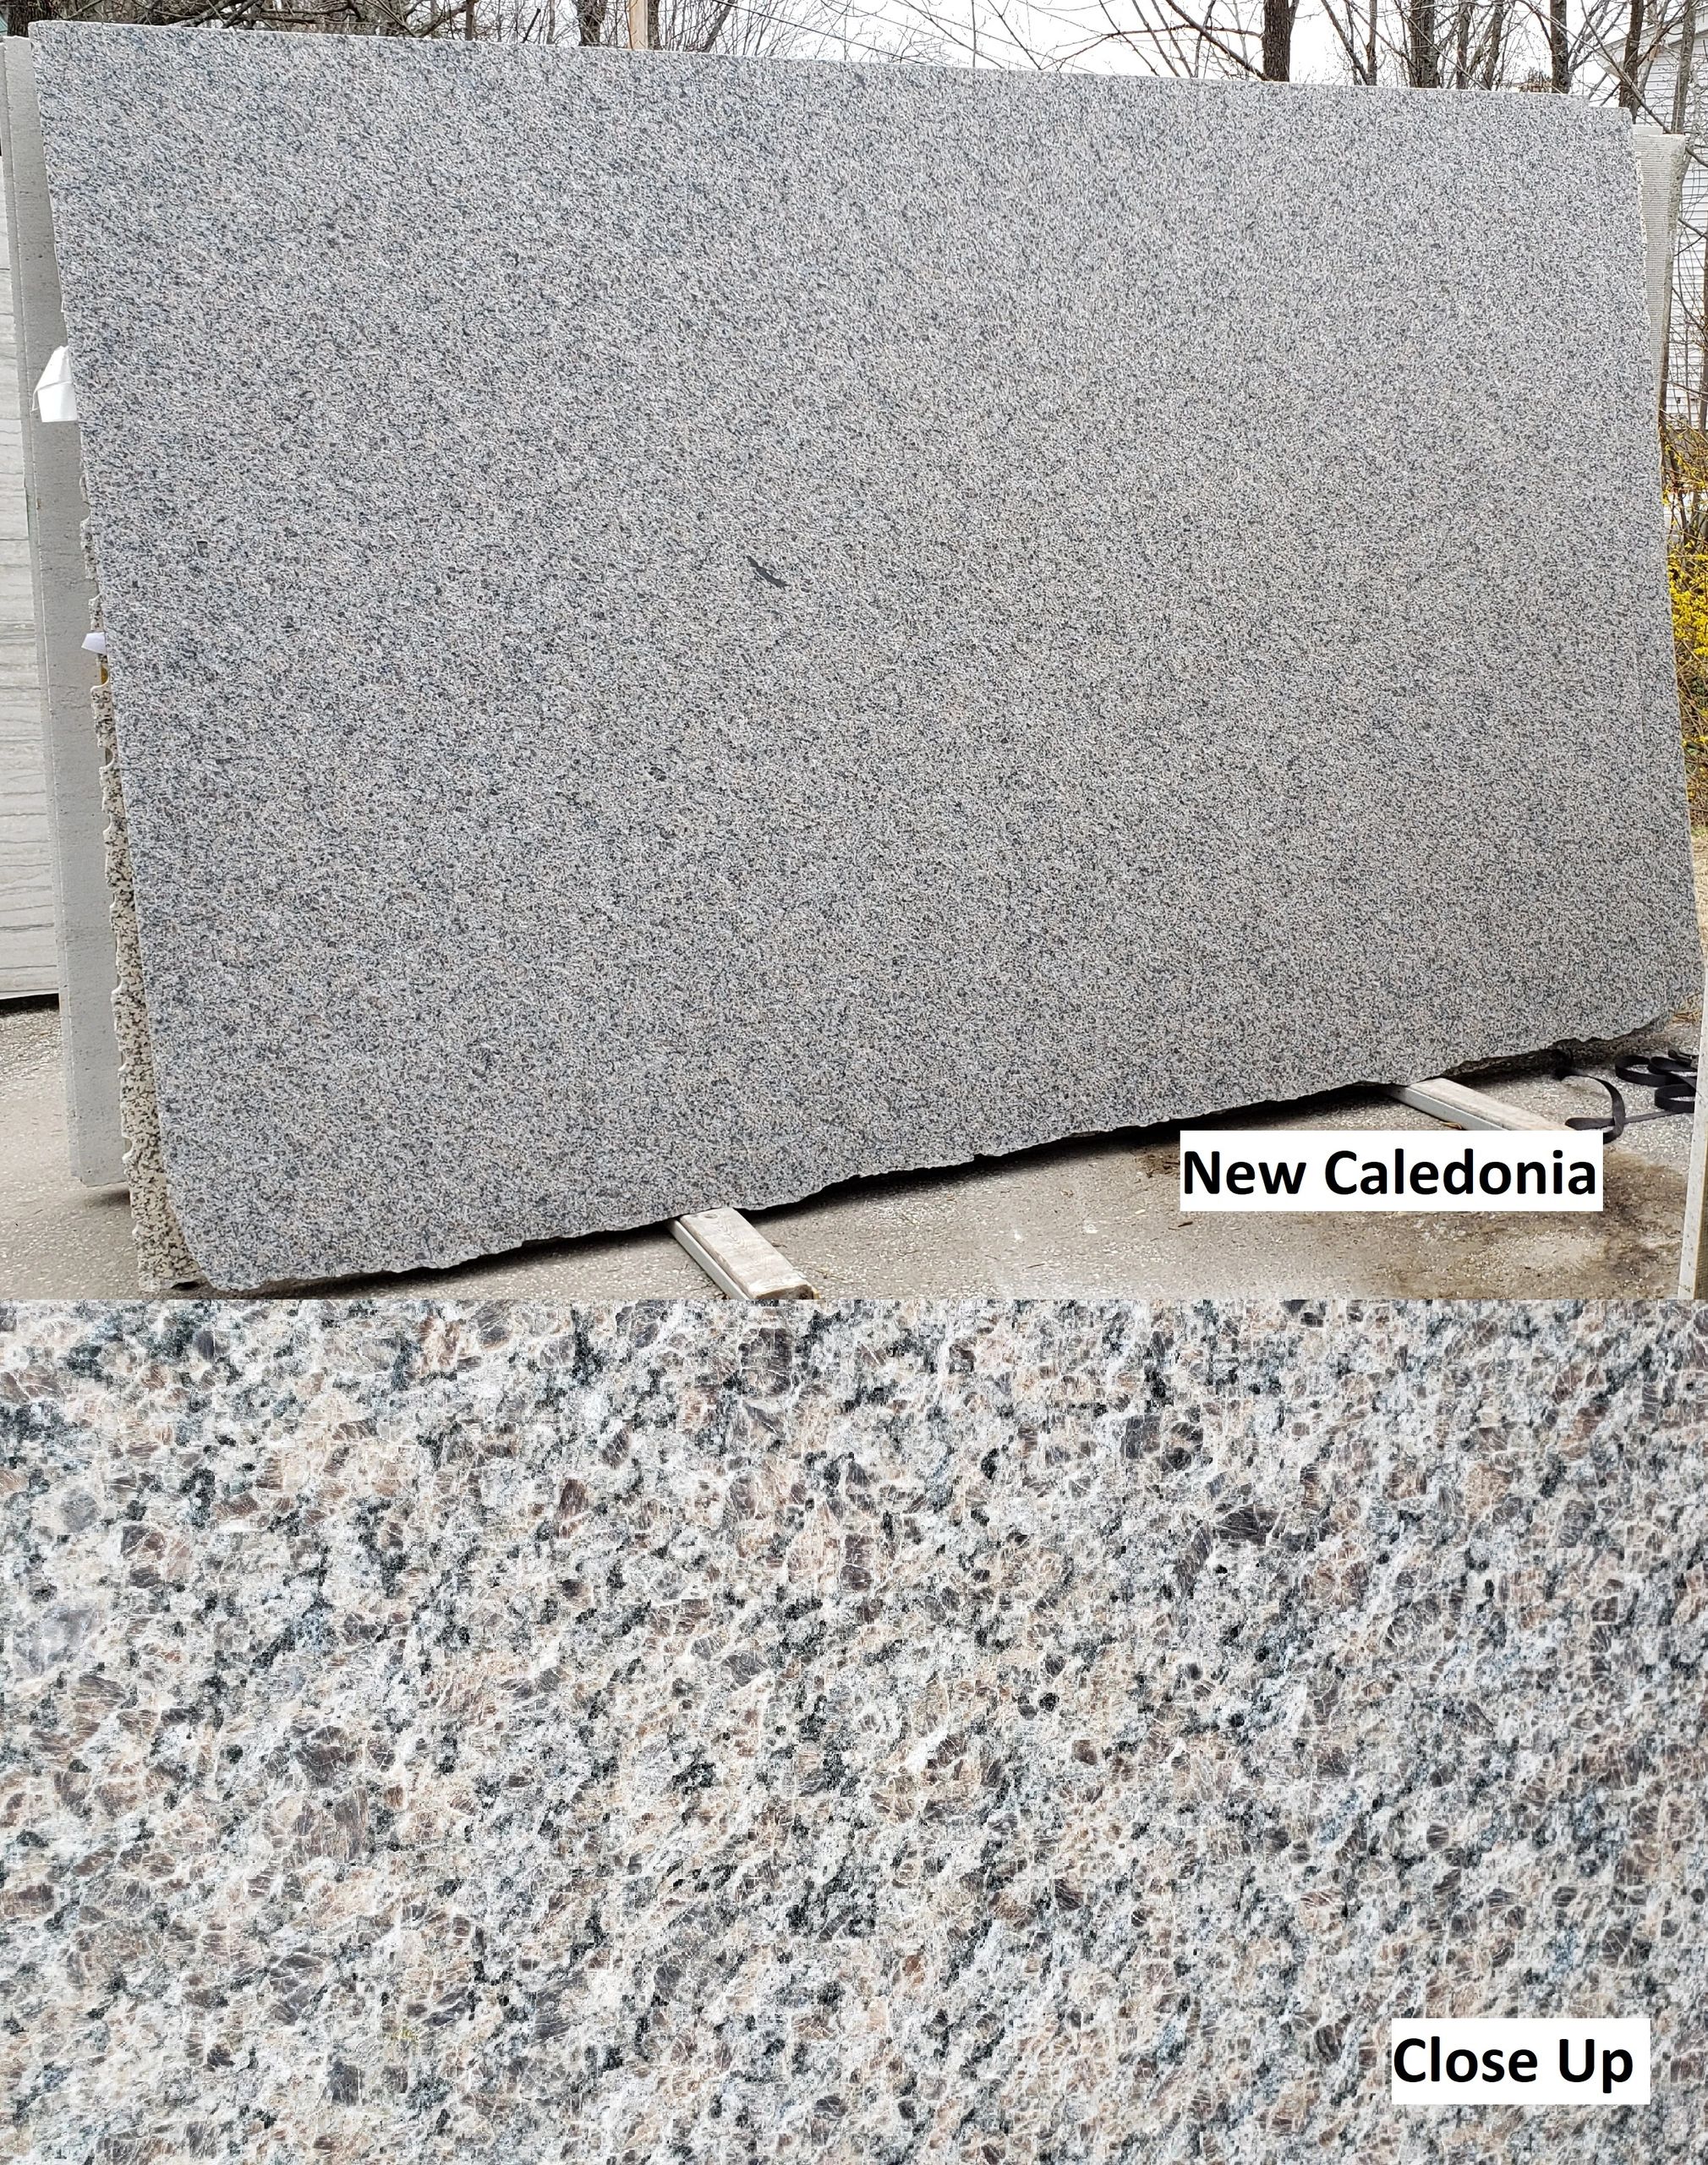 New Caledonia (Polished or Leathered), Granite countertops, Granite fabrication, Granite Rock, Grani